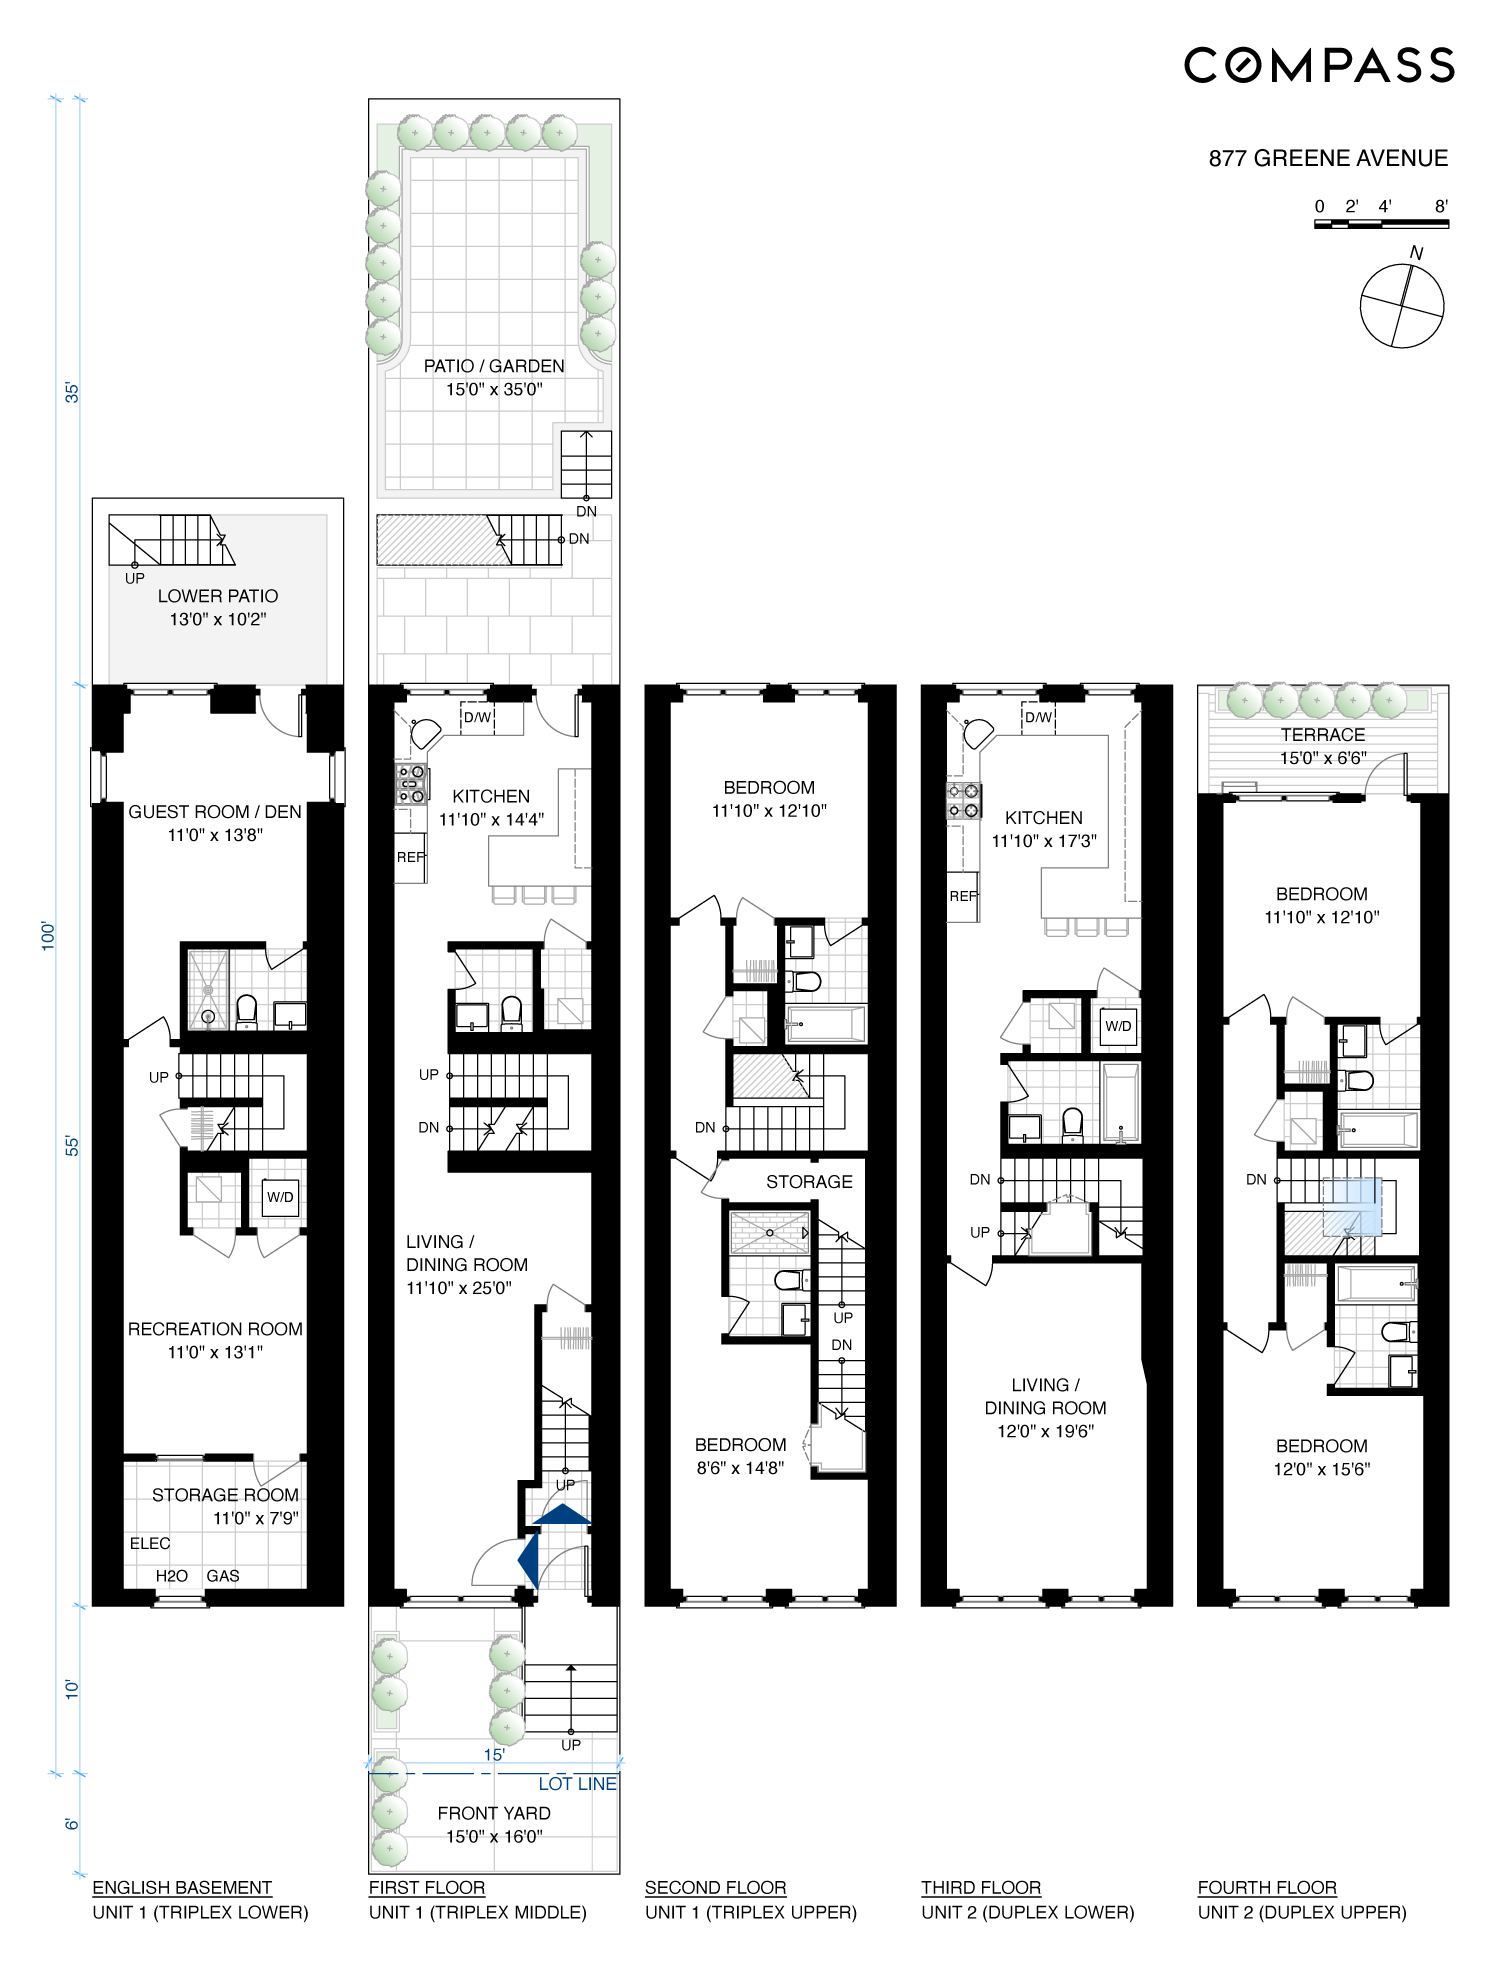 Floorplan for 877 Greene Avenue